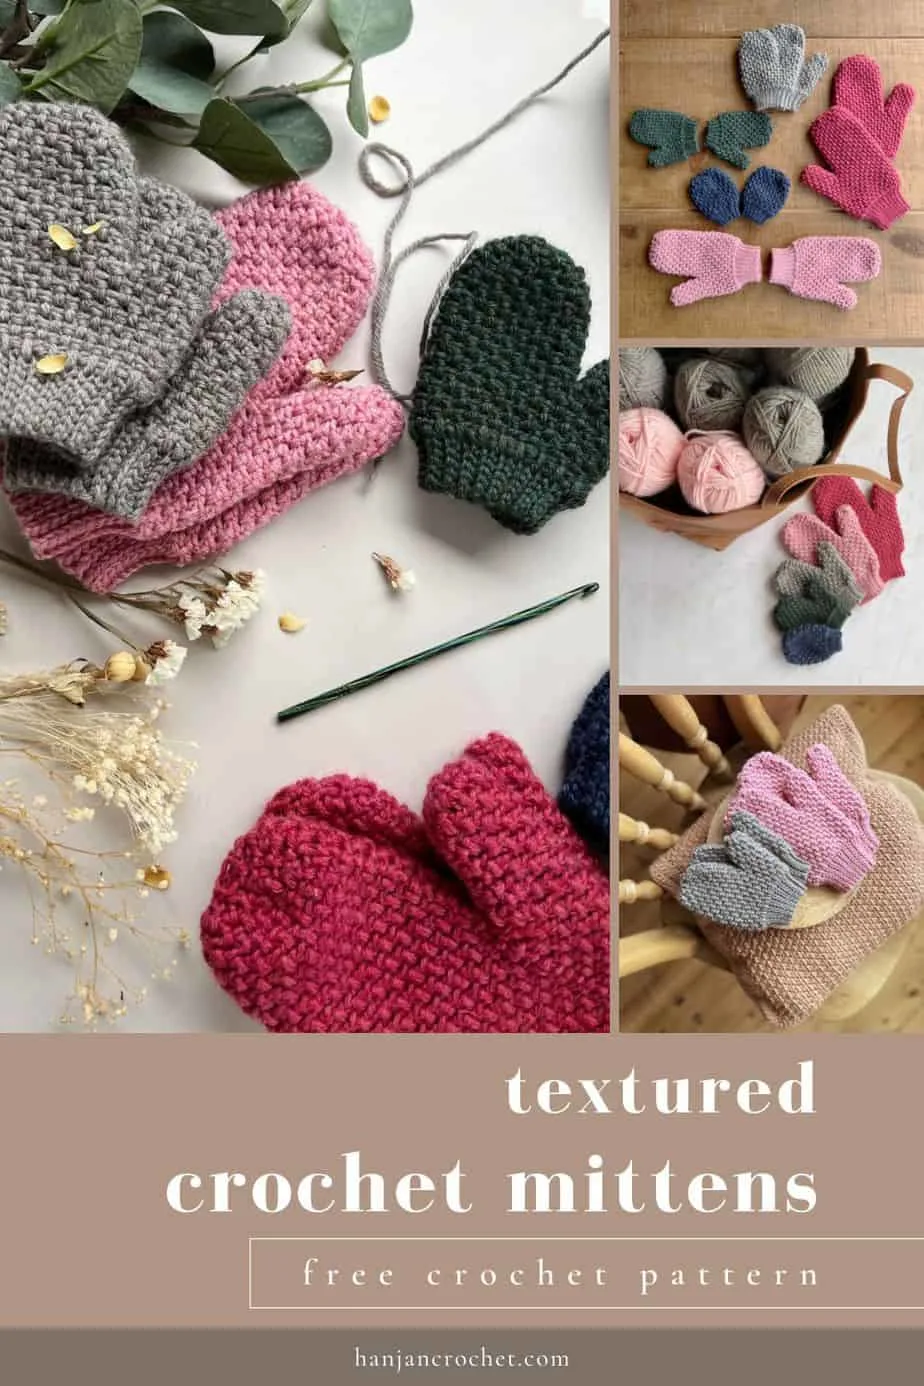 four photos showing crochet mittens in half double crochet herringbone stitch pattern